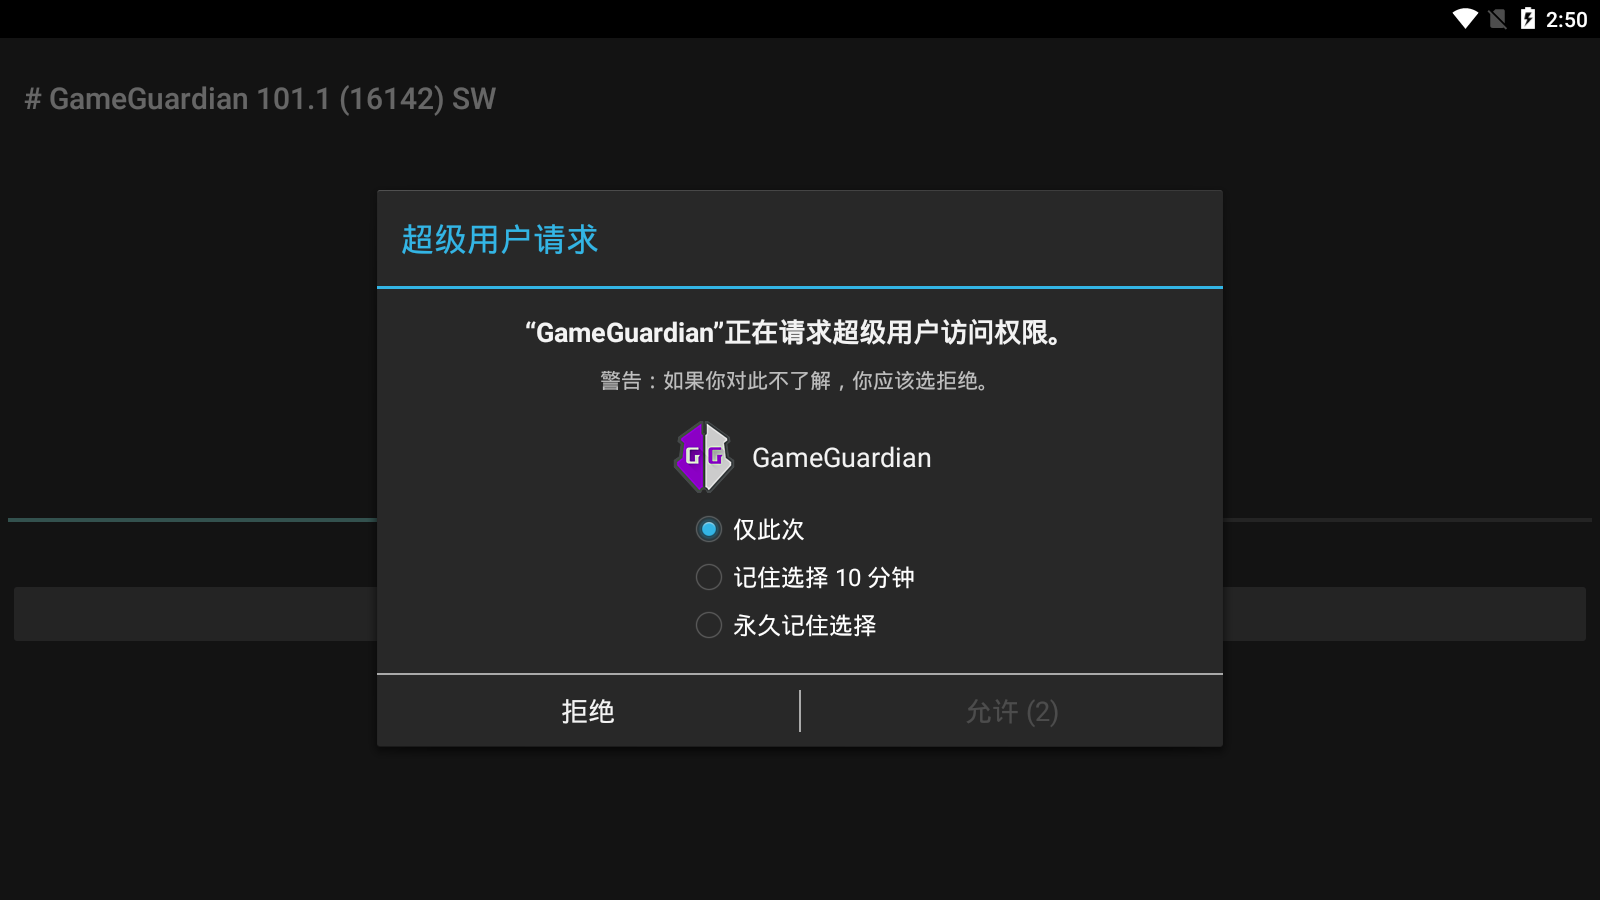 h5gg޸2023°(GameGuardian)v101.1 ٷ